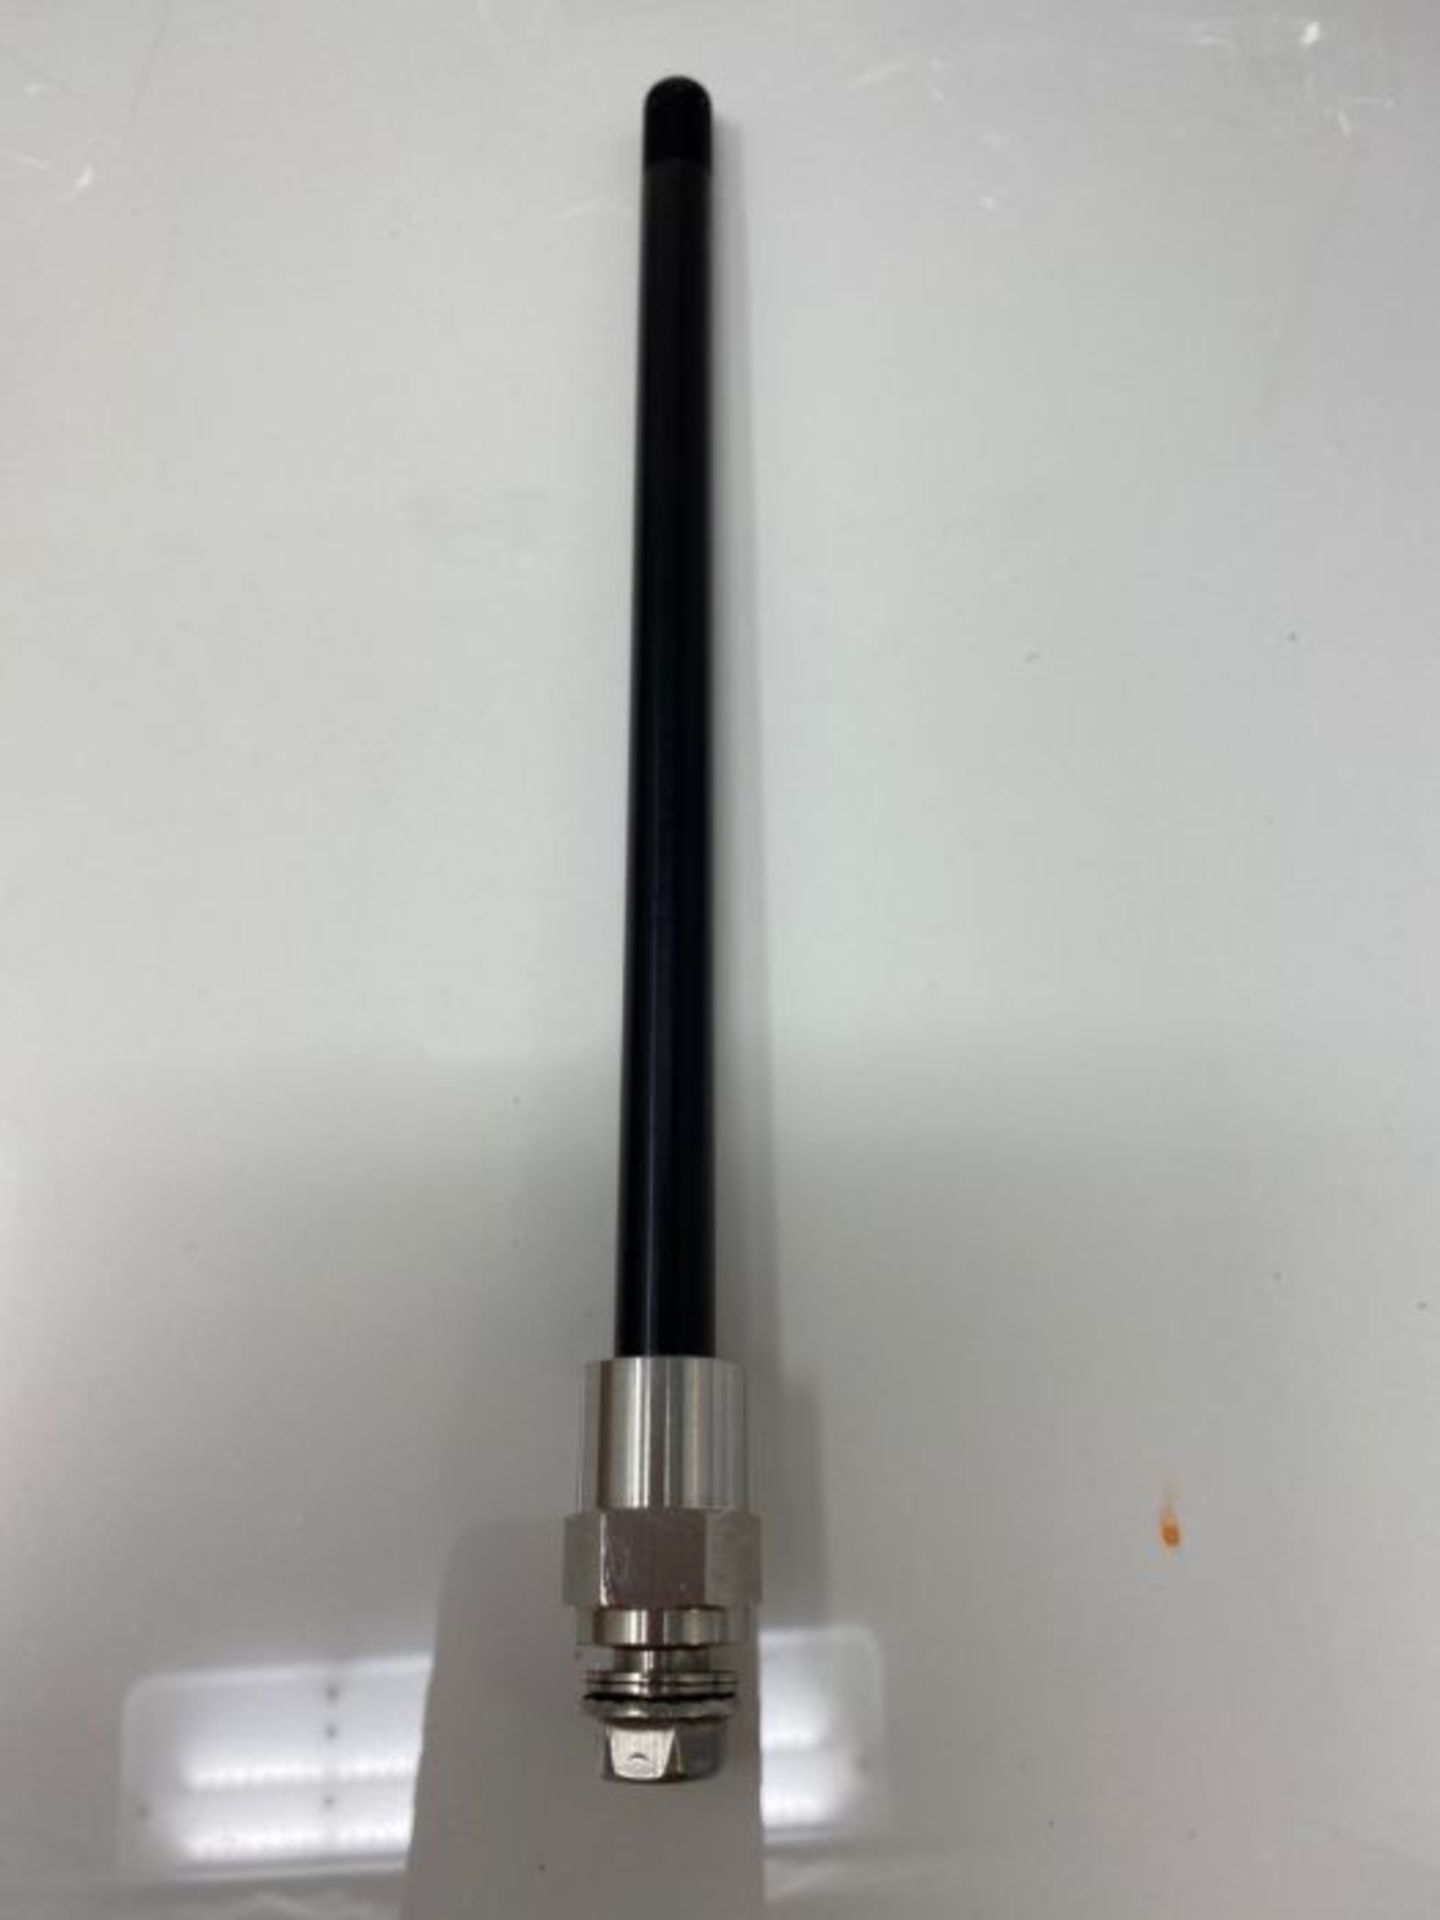 RRP £63.00 Croozer Unisex - Adult's Steckachse-3092019266 Plug-in axle, Black, standard size - Image 2 of 2